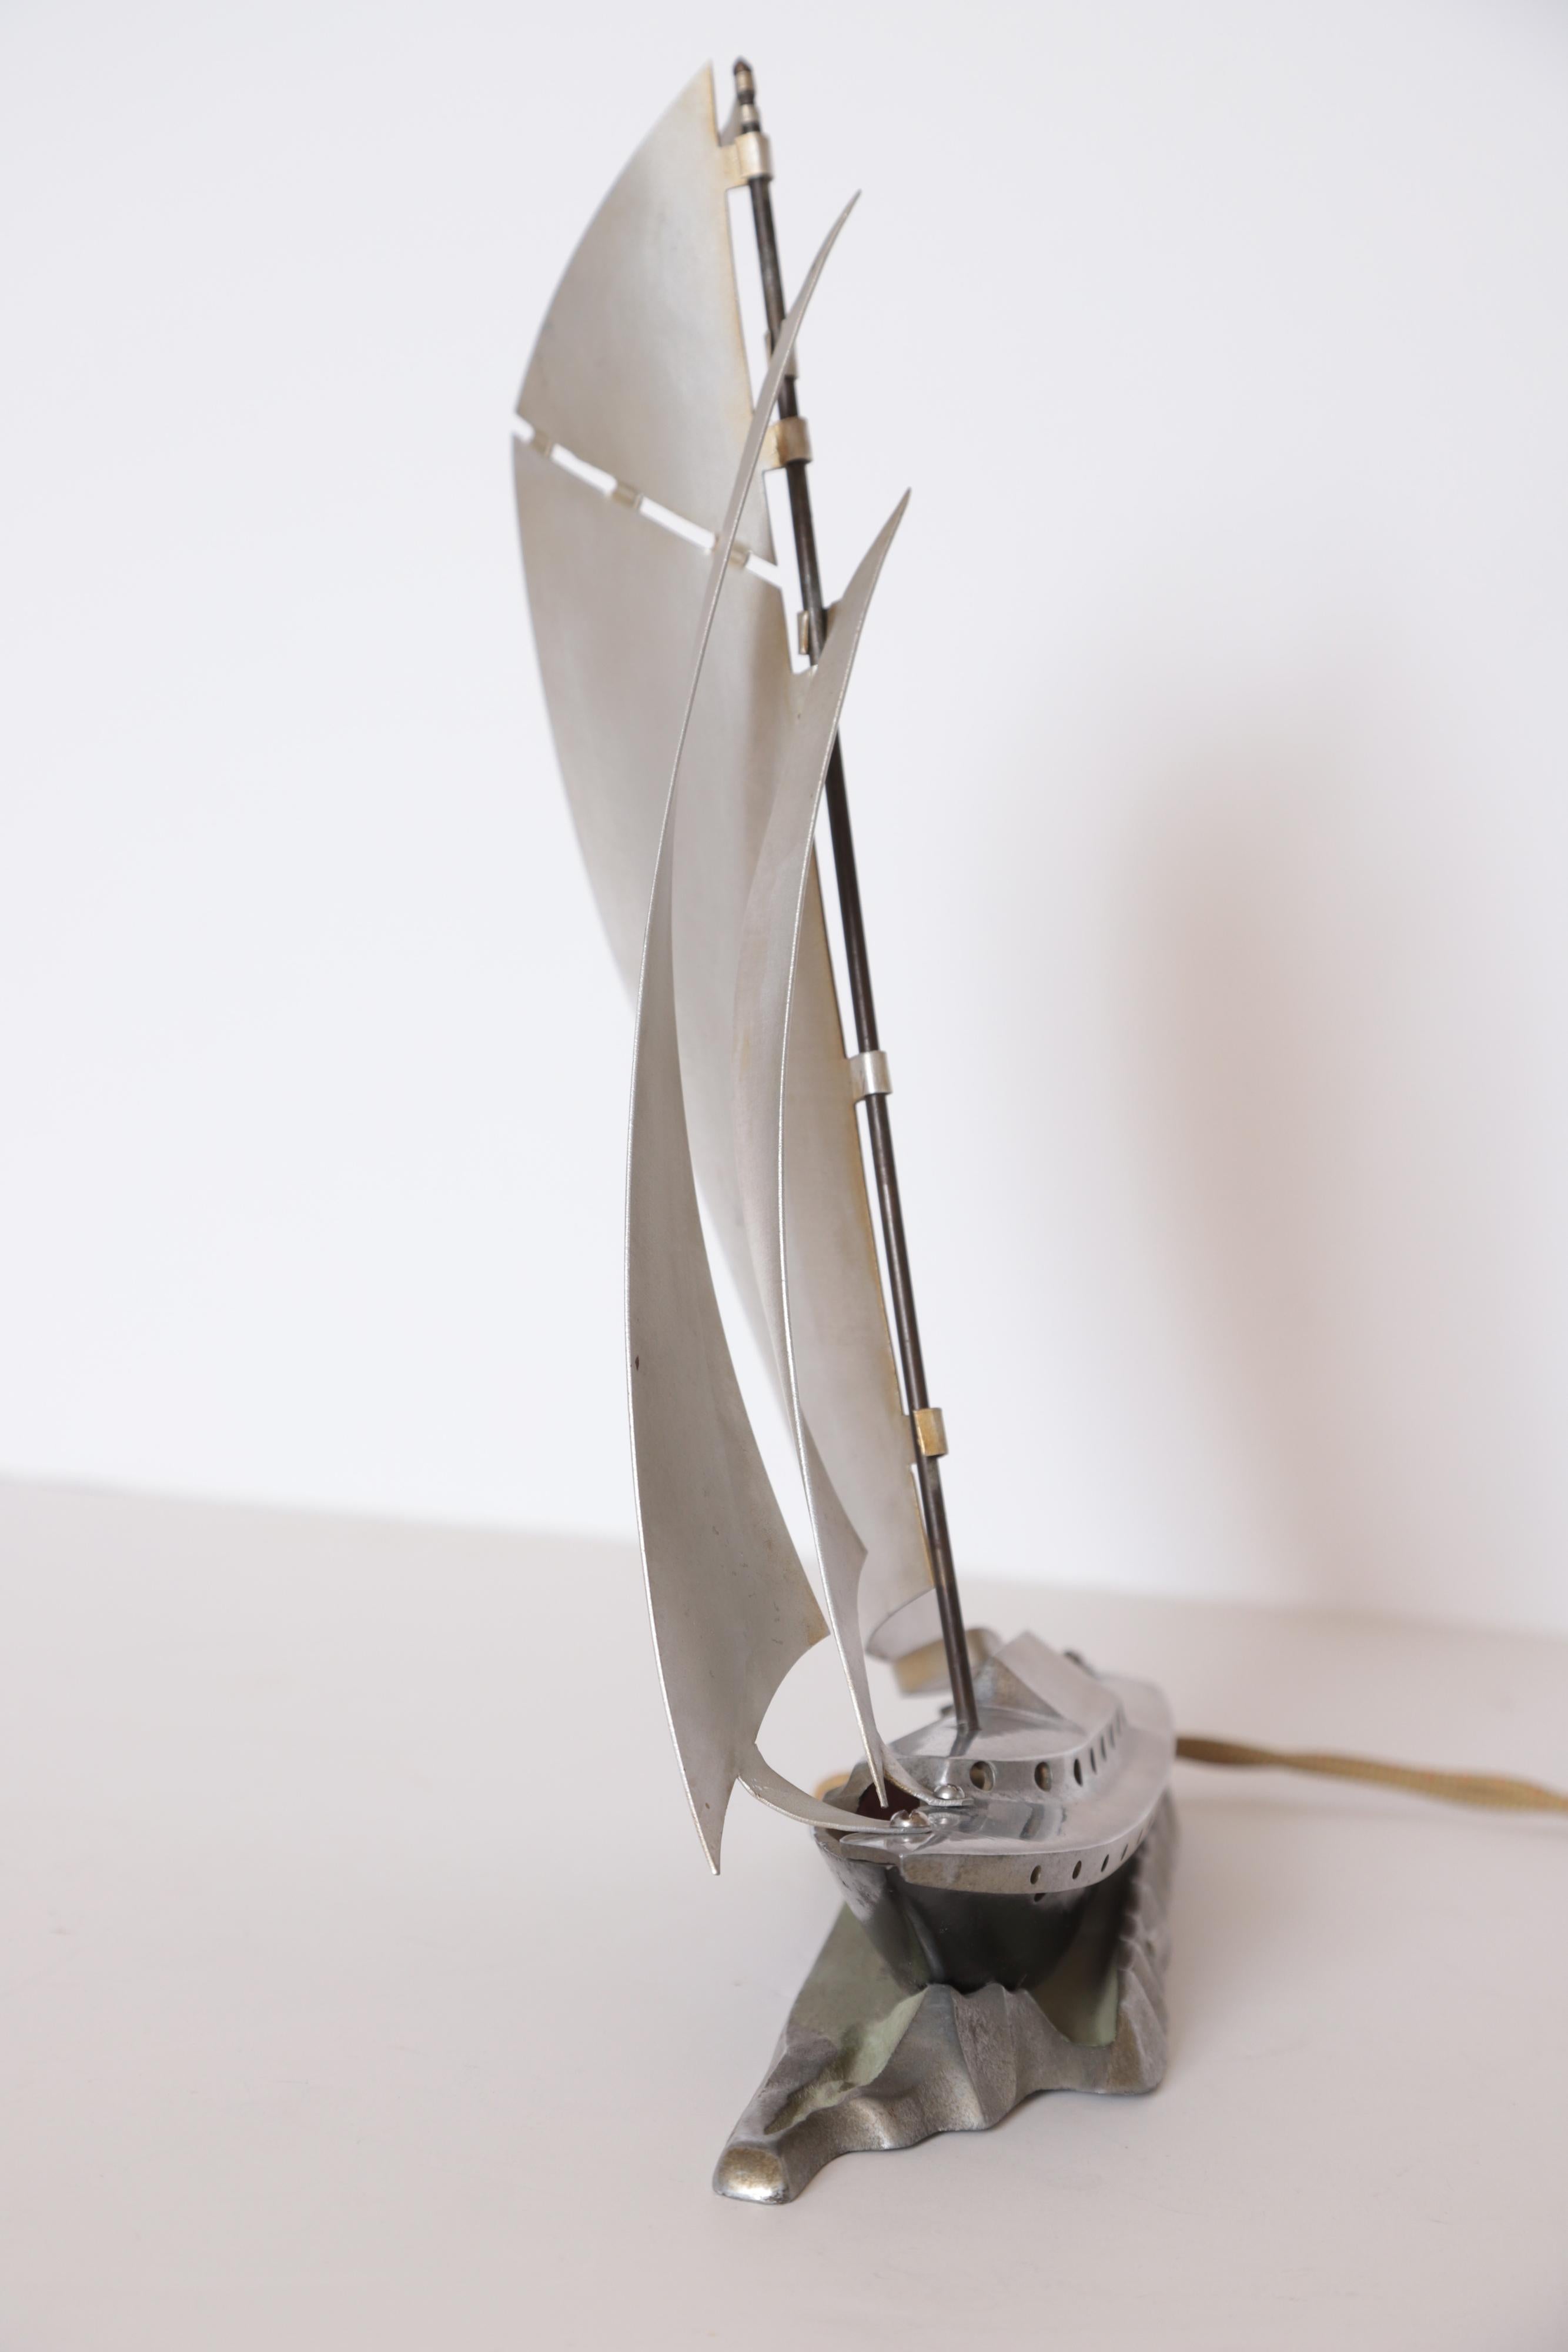 Machine Age Art Deco Aluminum Sailboat / Yacht Night Light / Mood Lamp For Sale 1